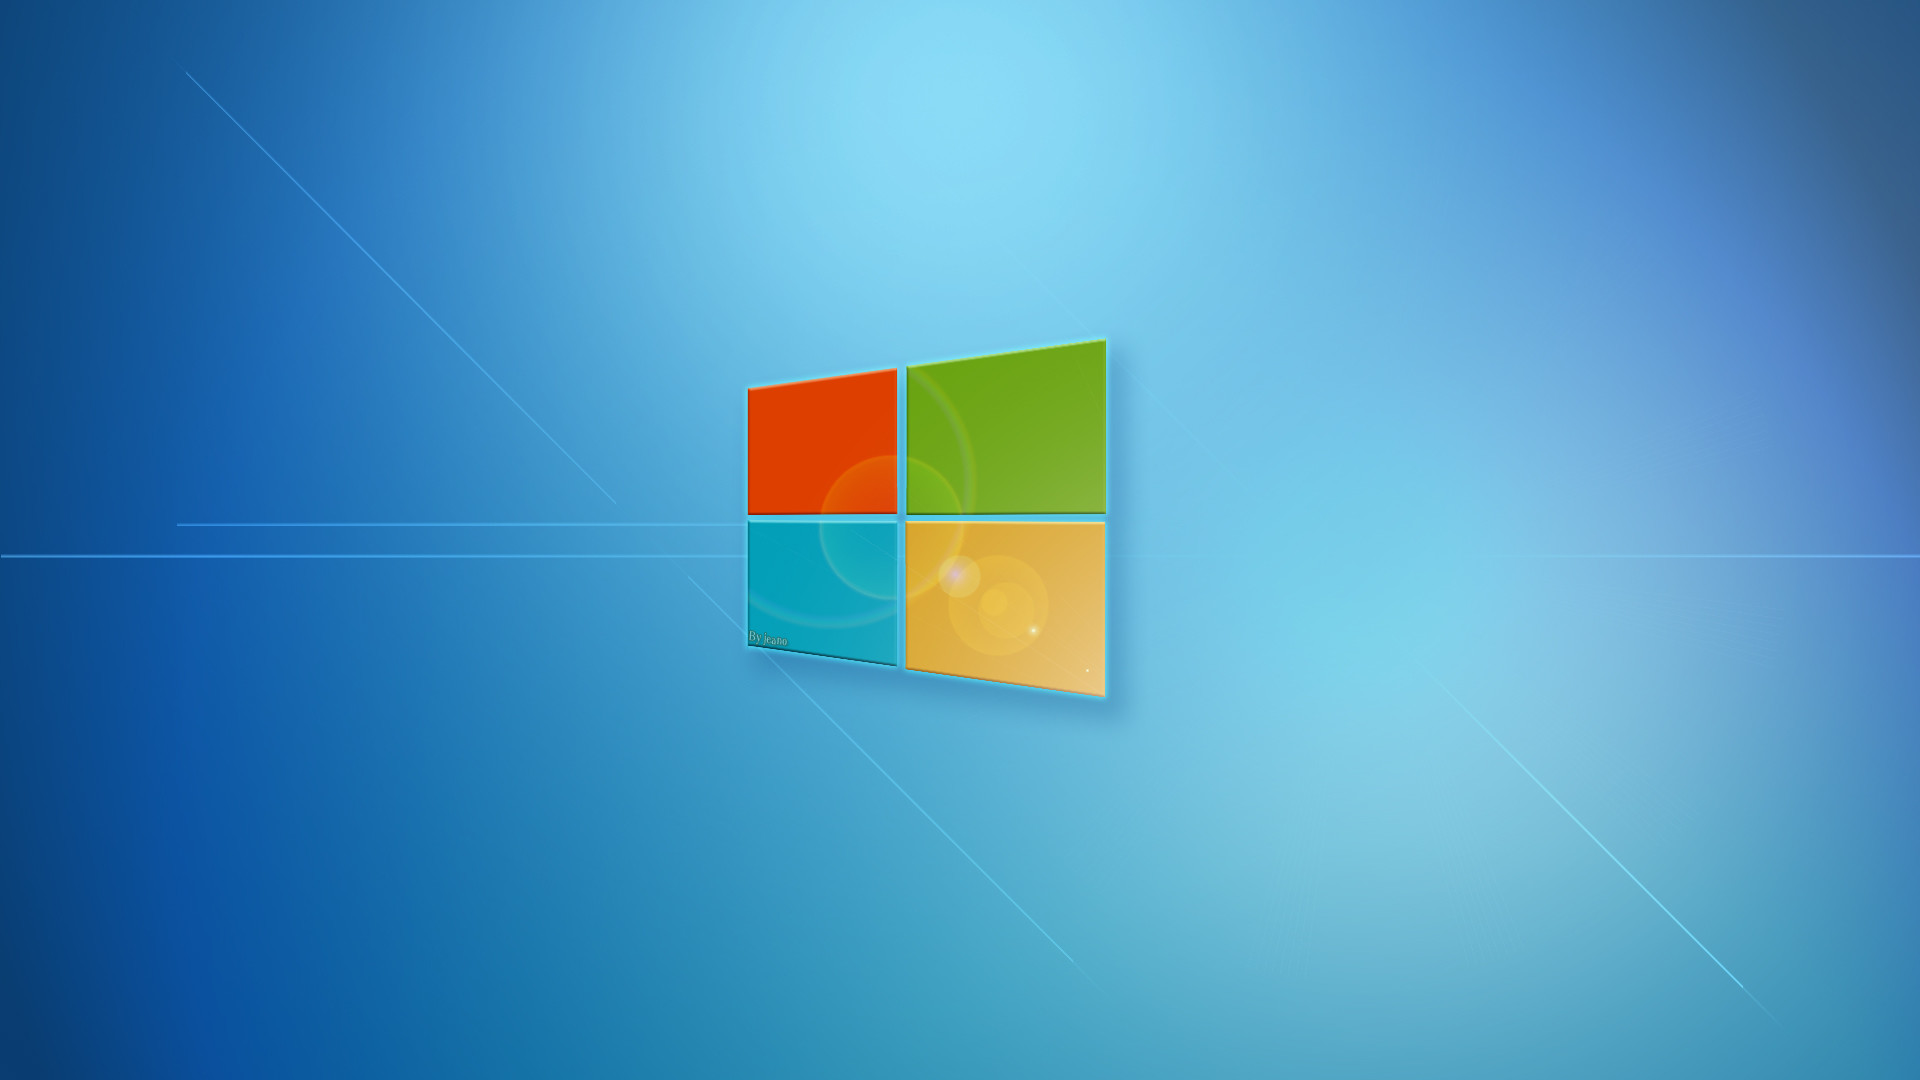 Windows New Theme HD desktop wallpaper : High Definition : Mobile Windows 8  HD Desktop Wallpapers Wallpapers)